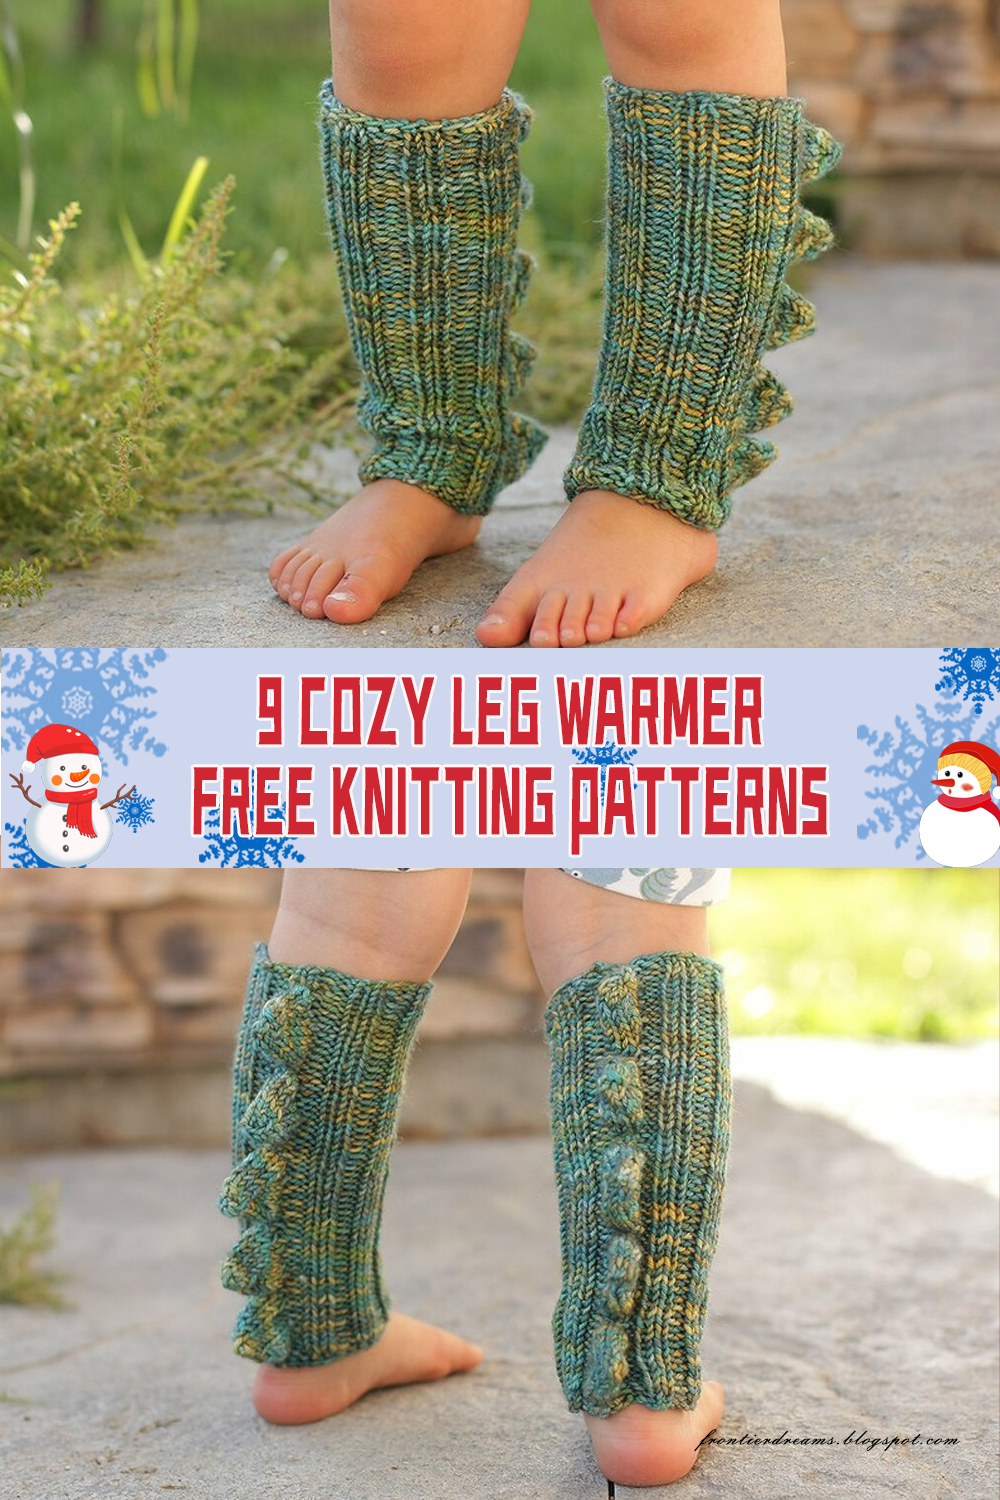 9 Cozy Leg Warmer Knitting Patterns - FREE - iGOODideas.com